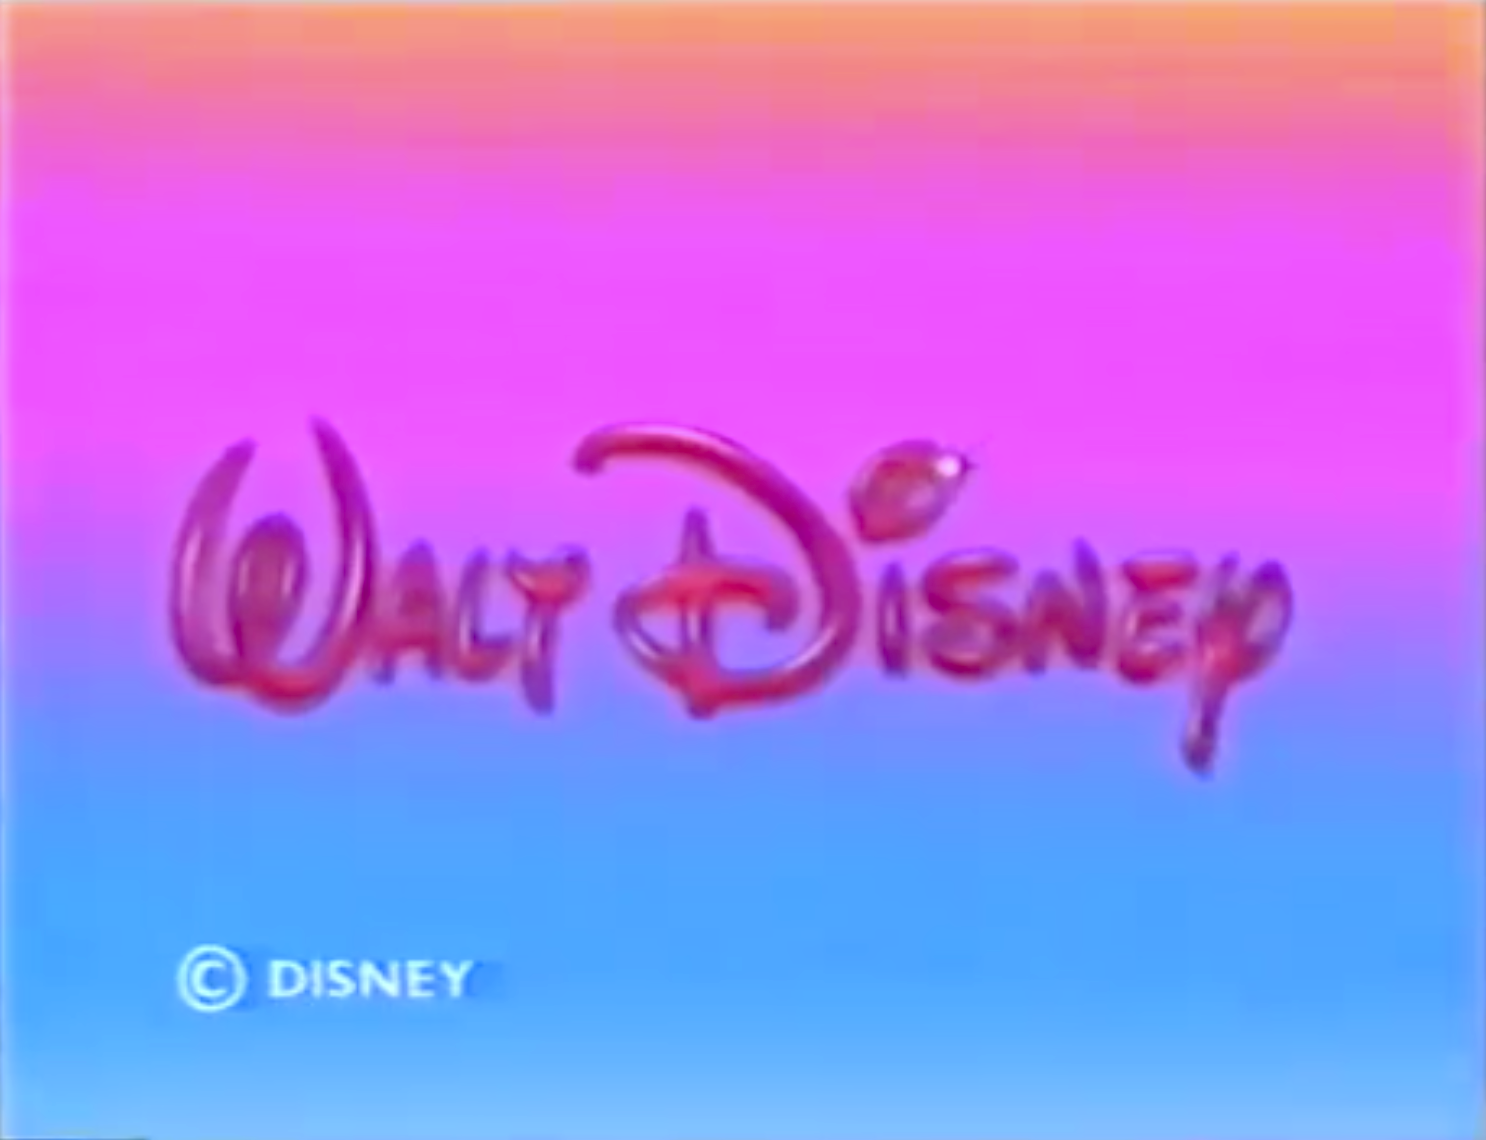 Walt Disney (Rainbow variant, shot 2)